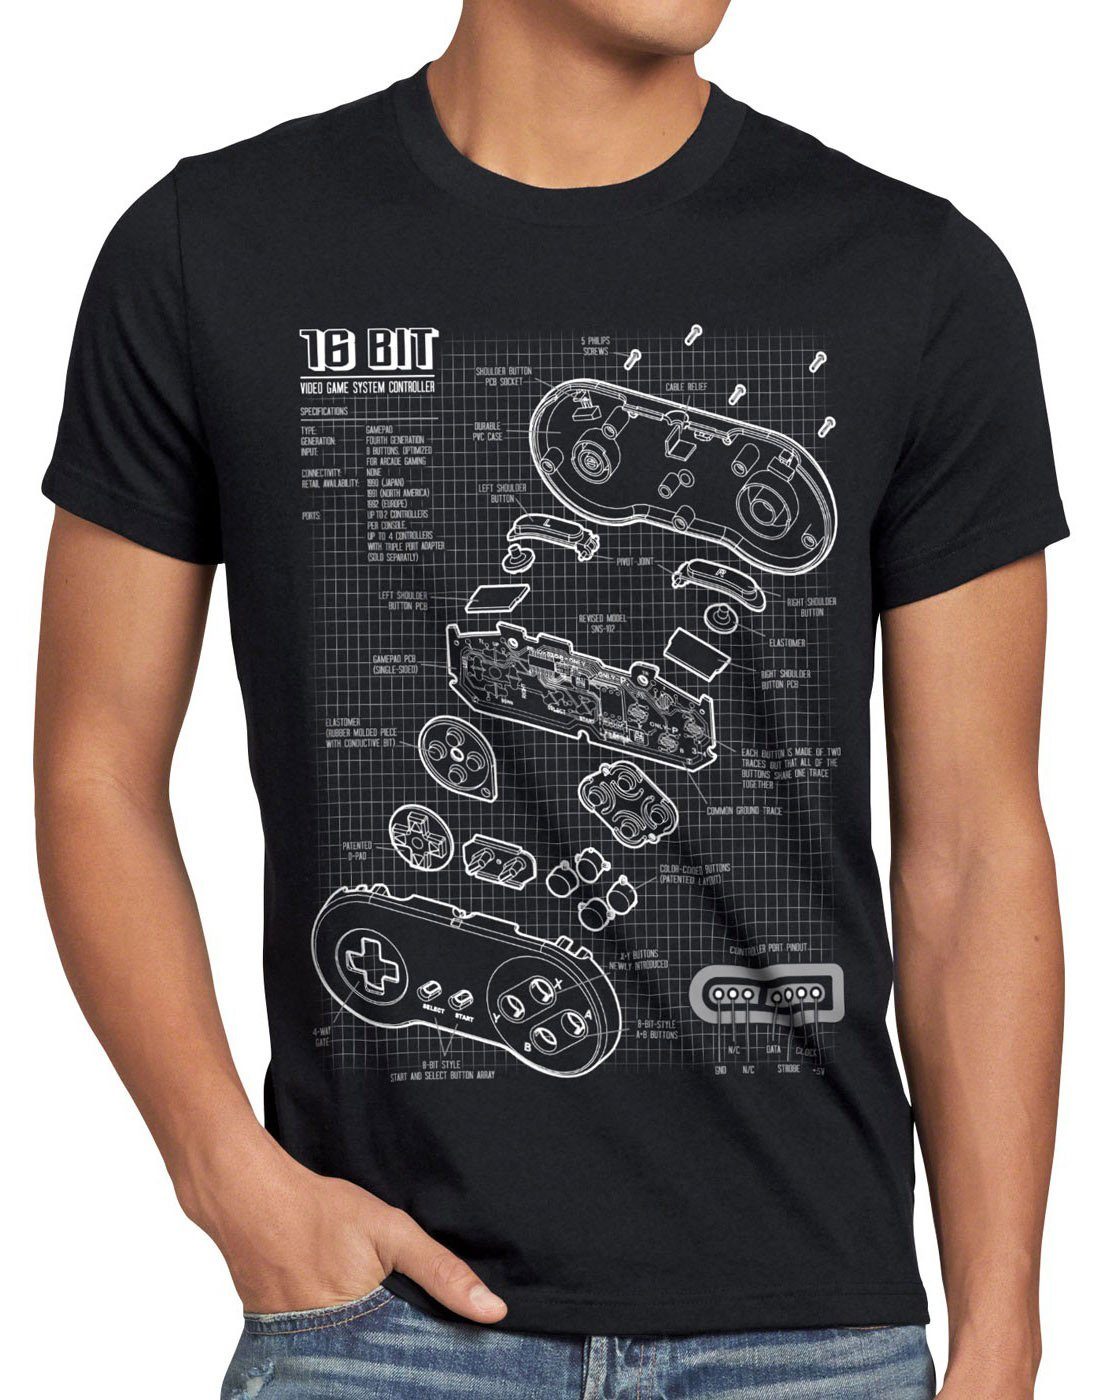 Hochwertiges Material style3 Print-Shirt Herren switch schwarz super T-Shirt classic 16-Bit nes mario snes nintendo Gamer famicom